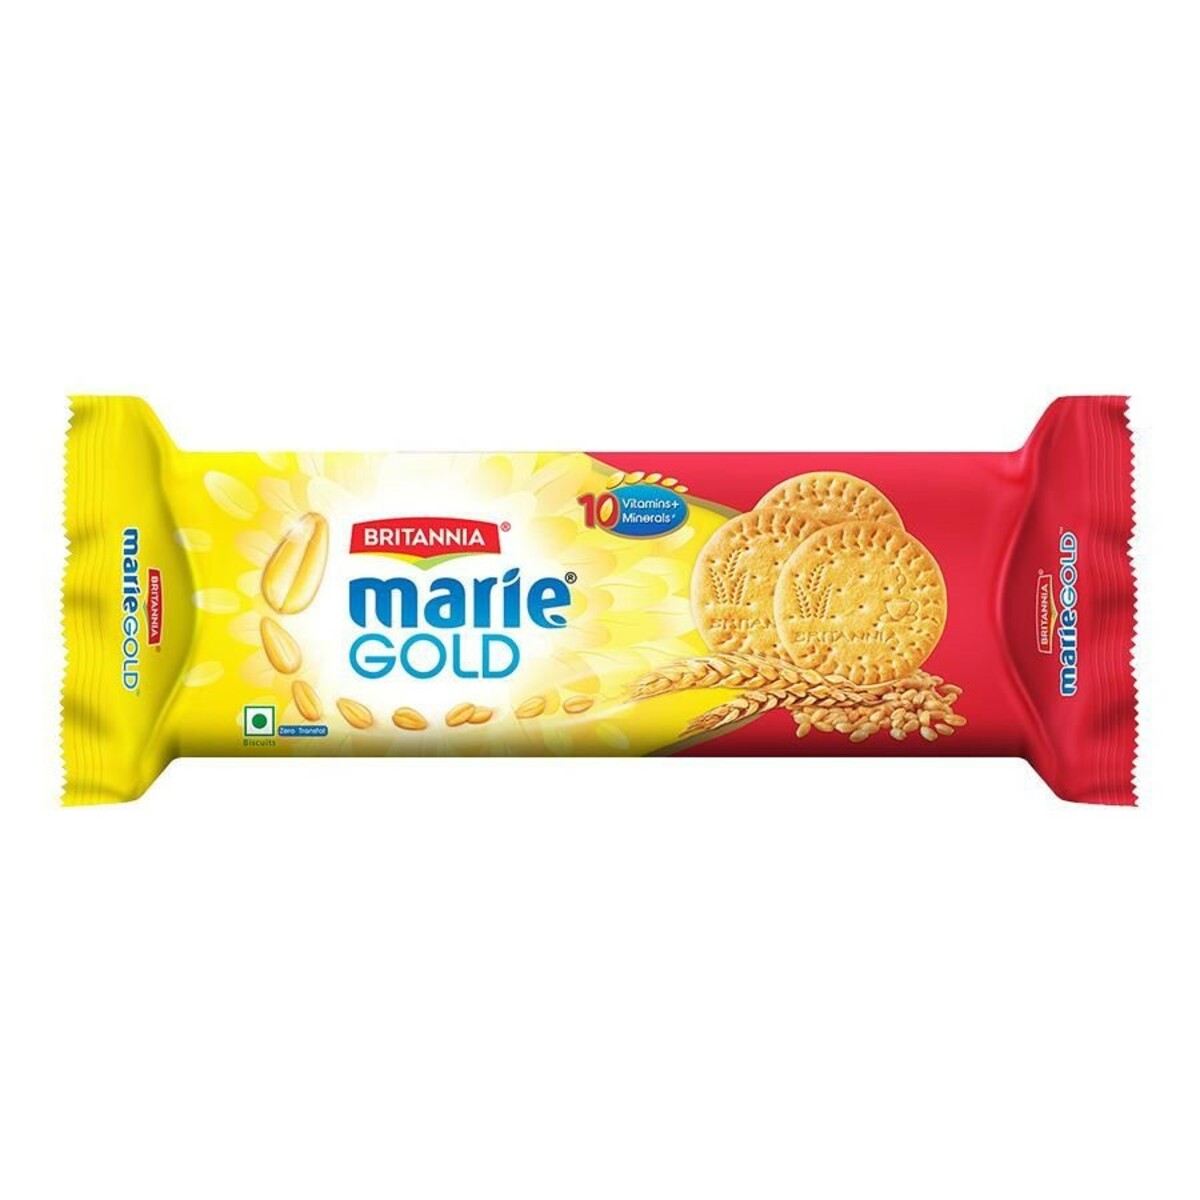 Britannia Marie Gold Biscuit 200g